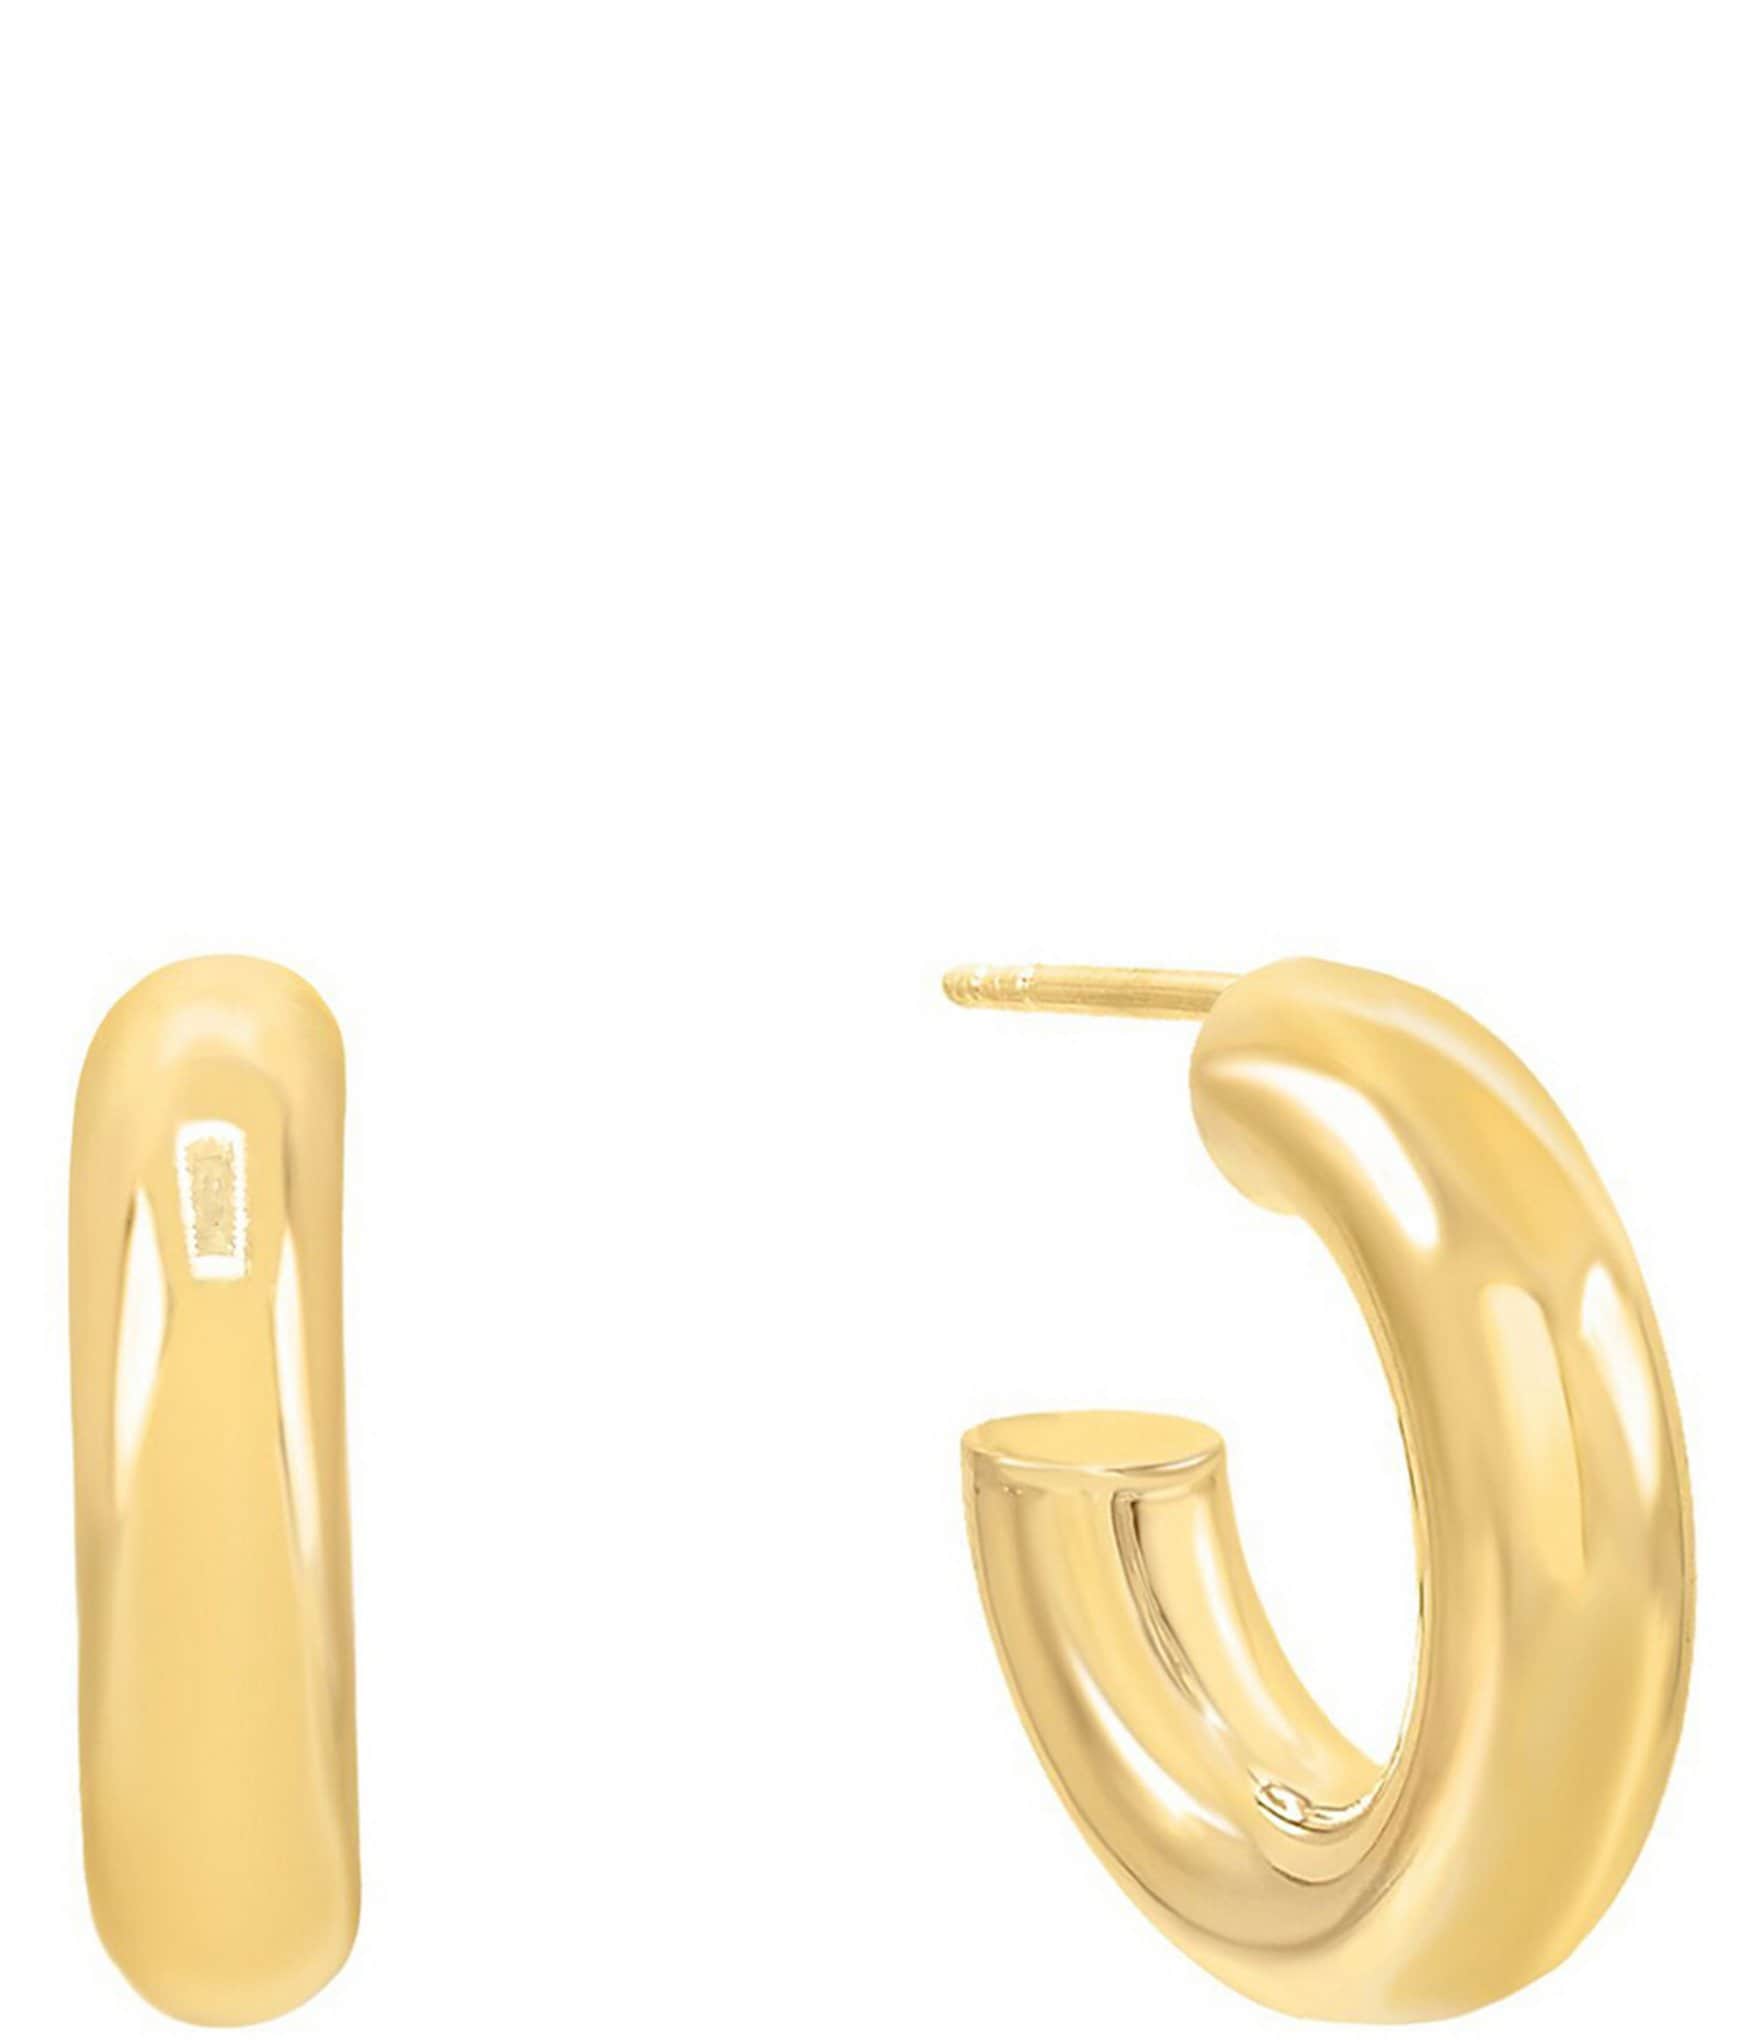 Buy WOWSHOW Large Big Gold Hoop Earrings Wide Flat Hoop Earrings Thick Hoops  for Women at Amazon.in